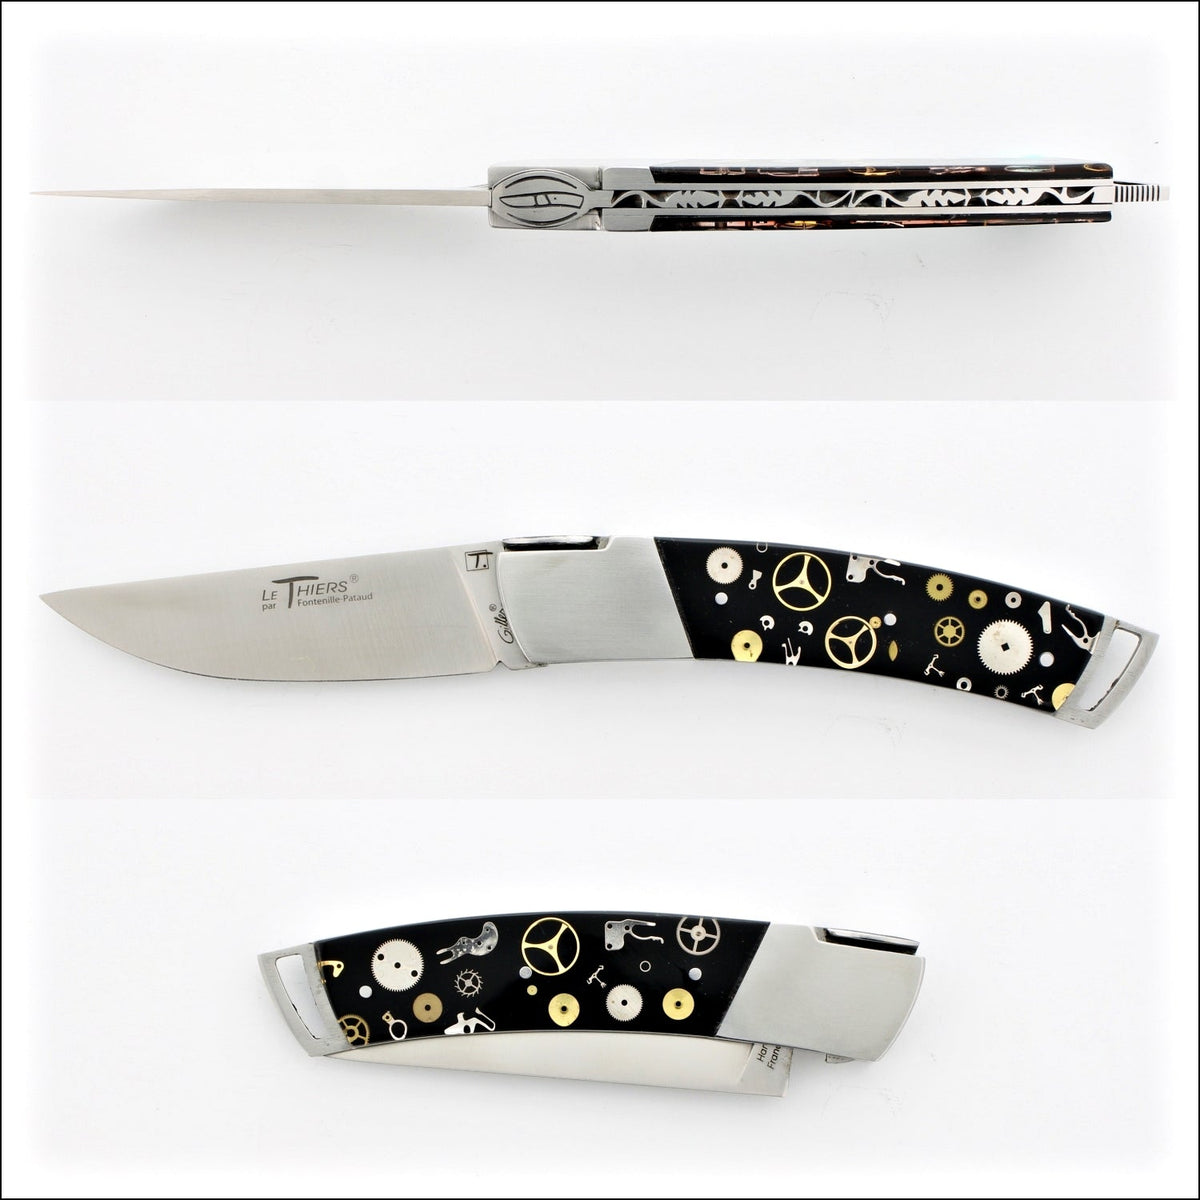 Le Thiers Gentleman 12 cm Pocket Knife Genuine Timepiece Gears Inlay